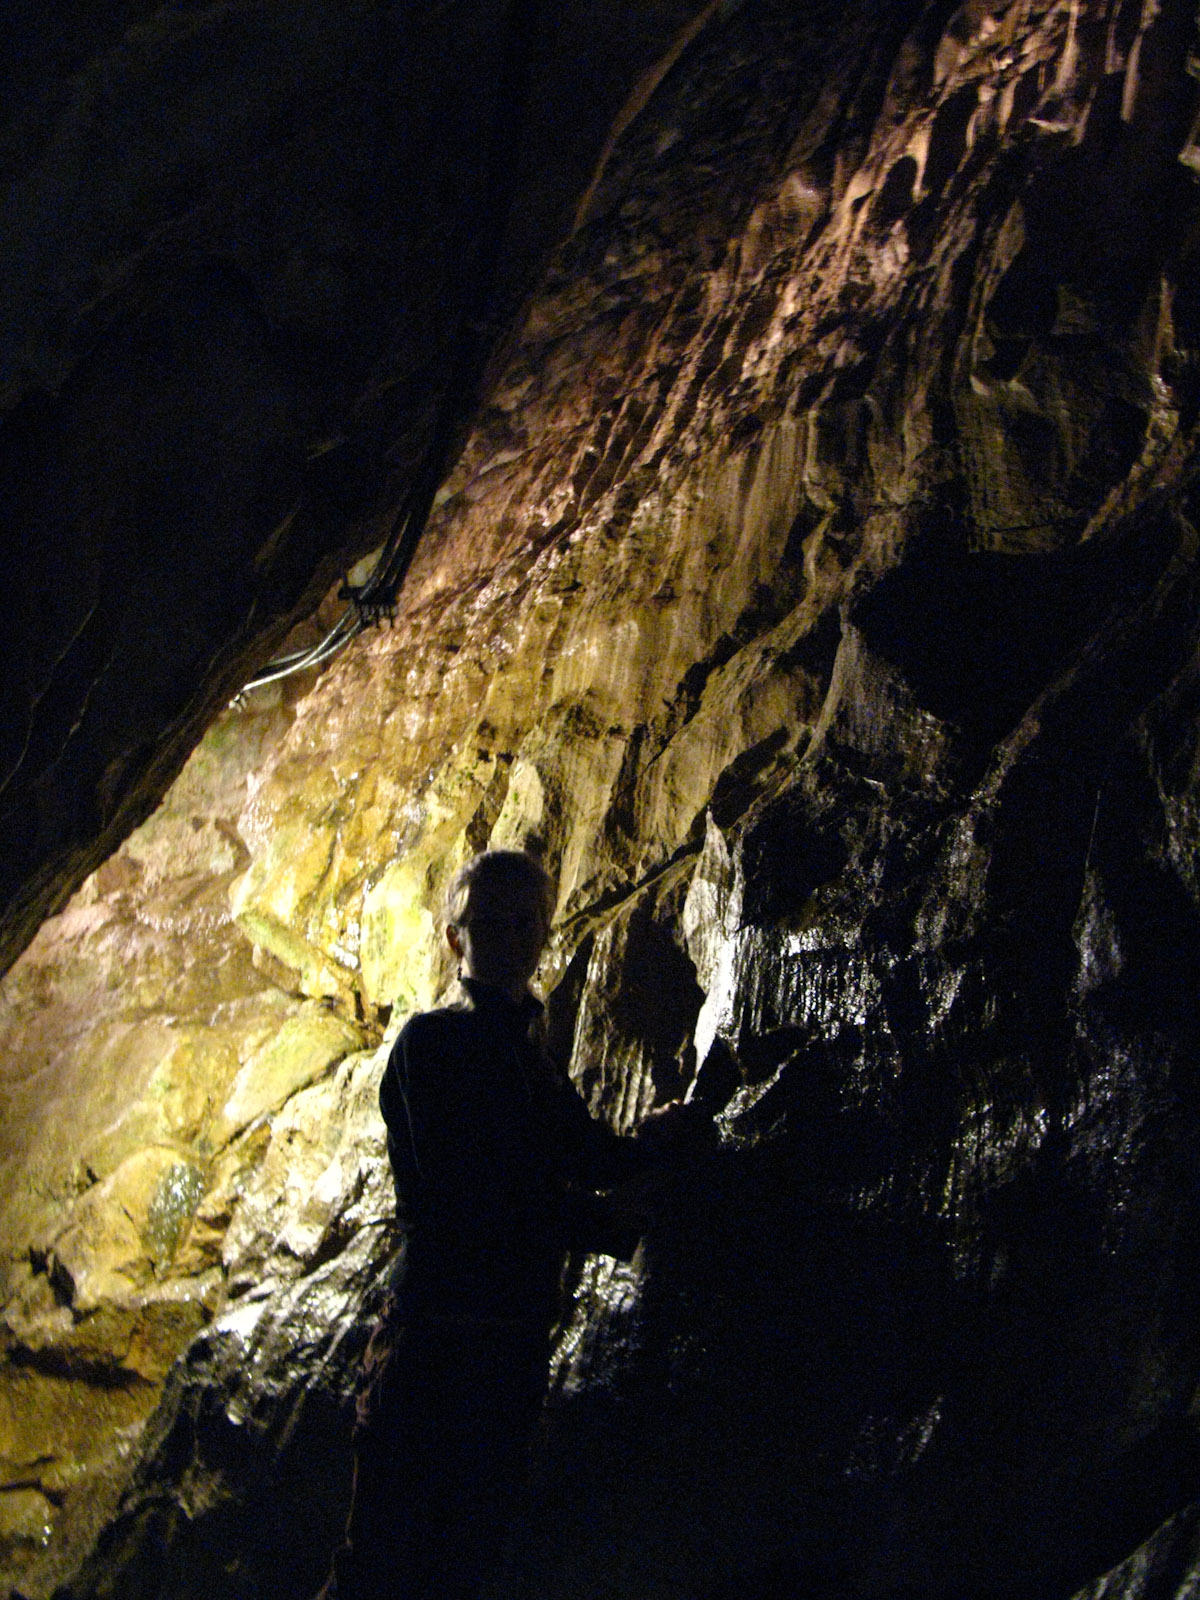 Hanne in MroÅºna (Frosty) Cave